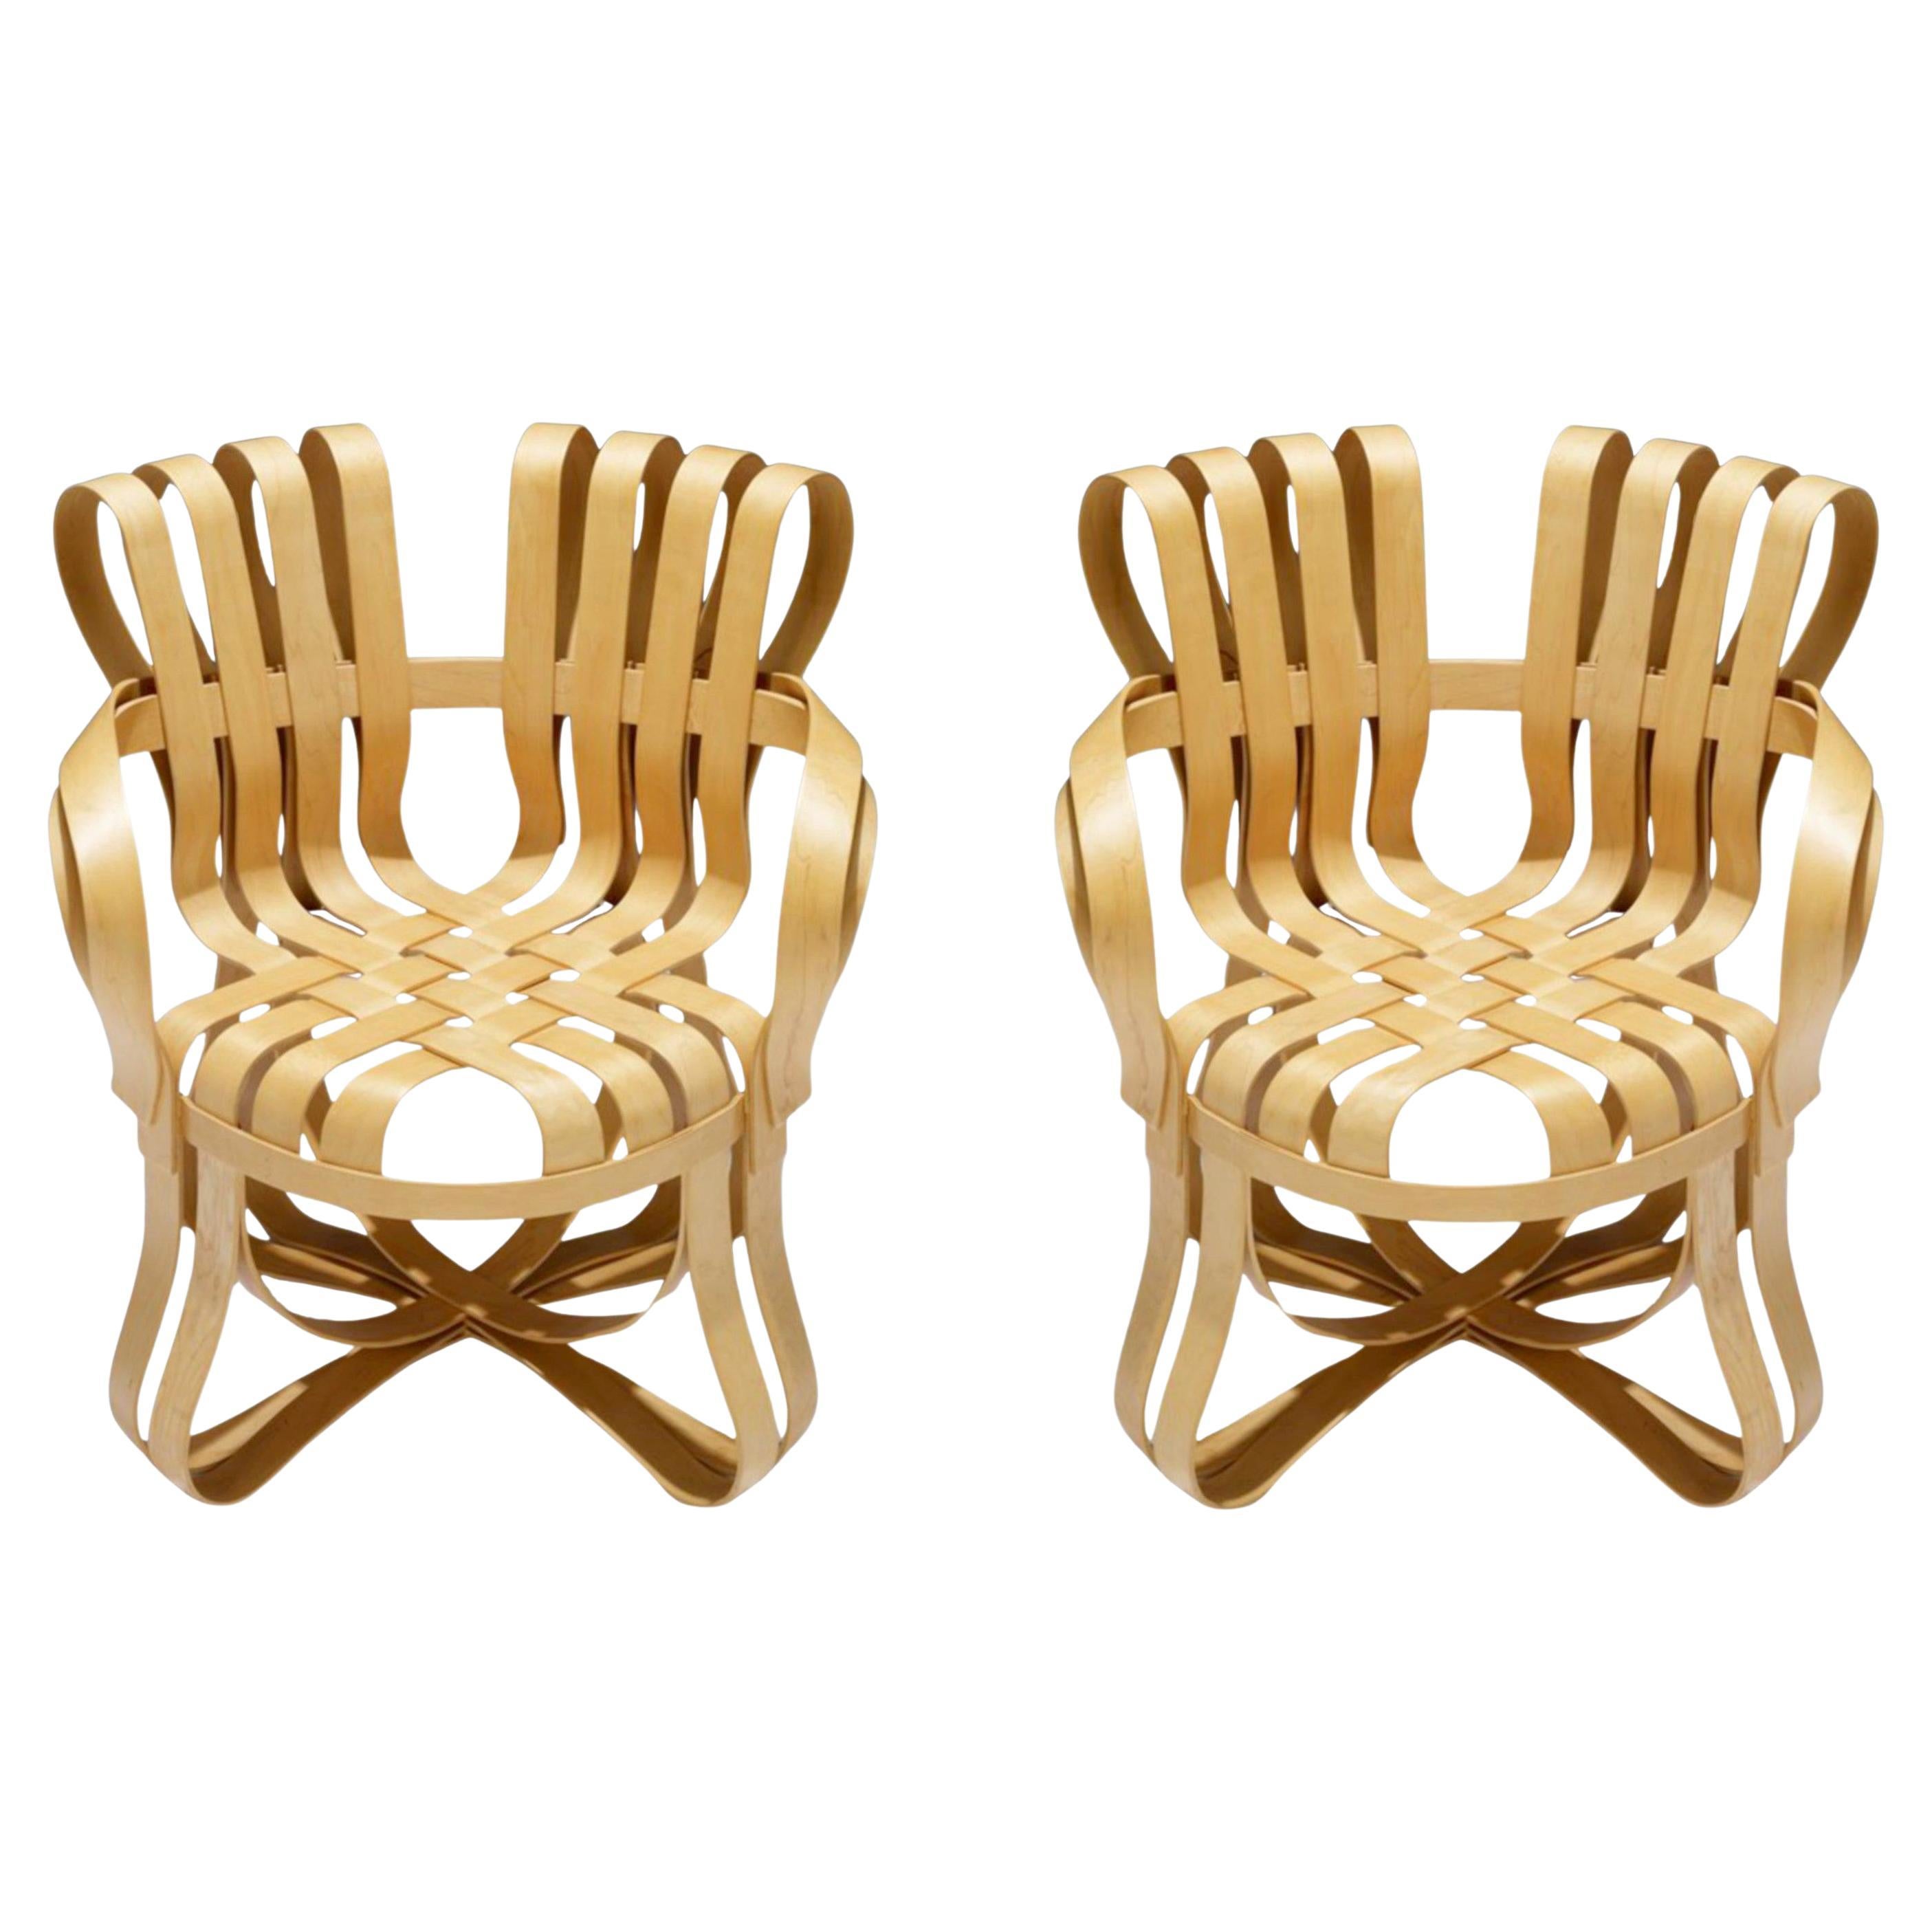 Frank Gehry für Knoll, Paar Kreuzkreuz-Stühle aus gebogenem Ahornholz